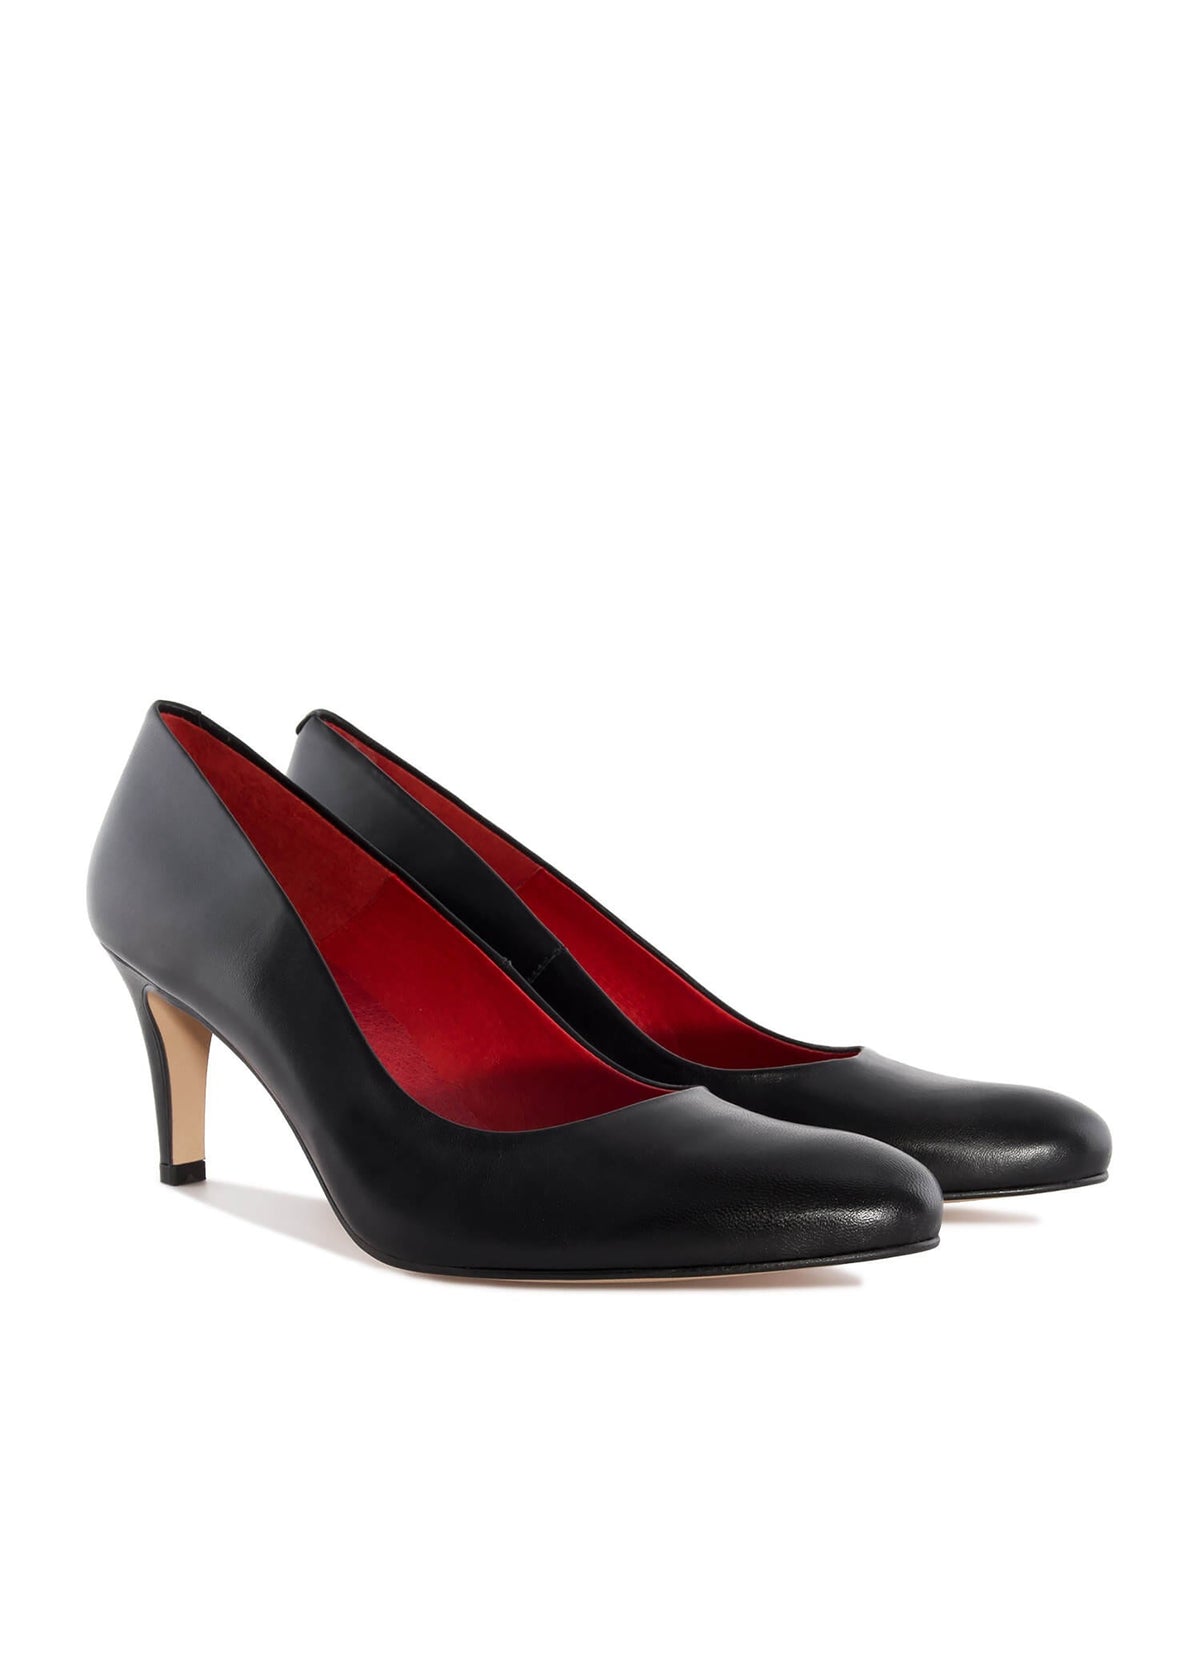 Stiletto heels - Natalia, black leather